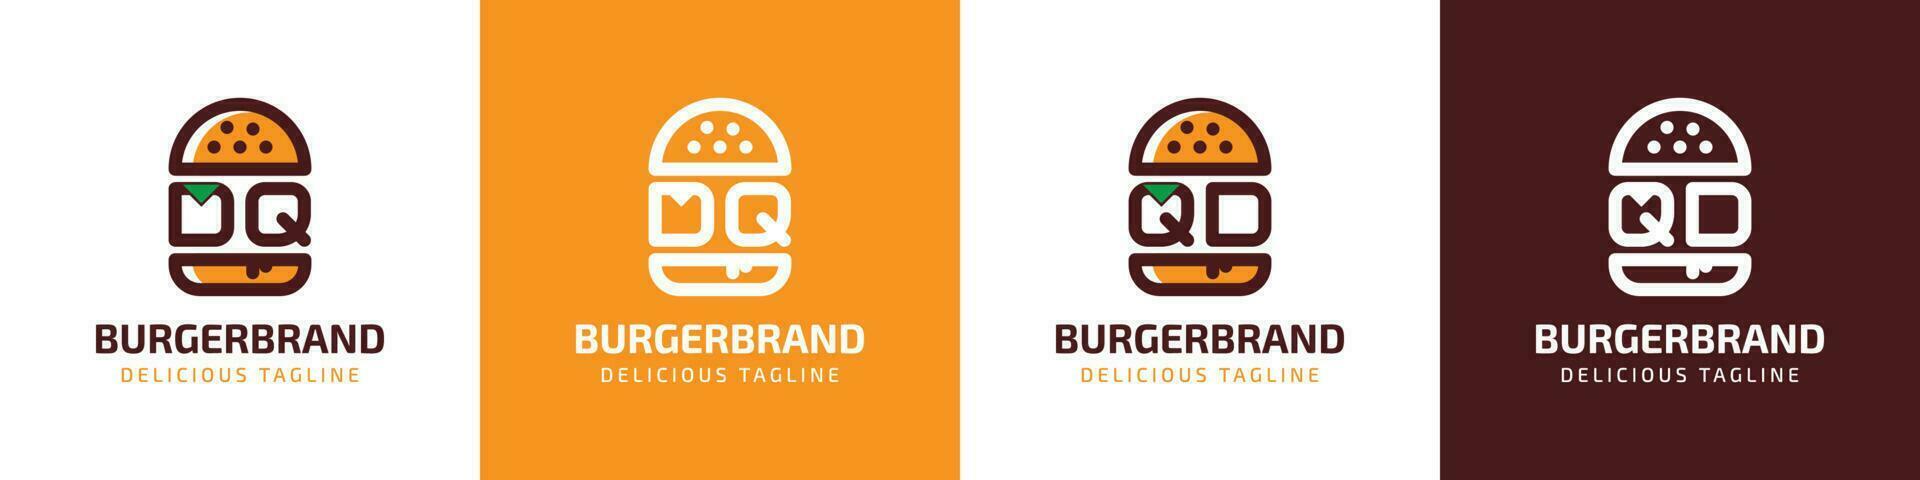 letra dq y qd hamburguesa logo, adecuado para ninguna negocio relacionado a hamburguesa con dq o qd iniciales. vector